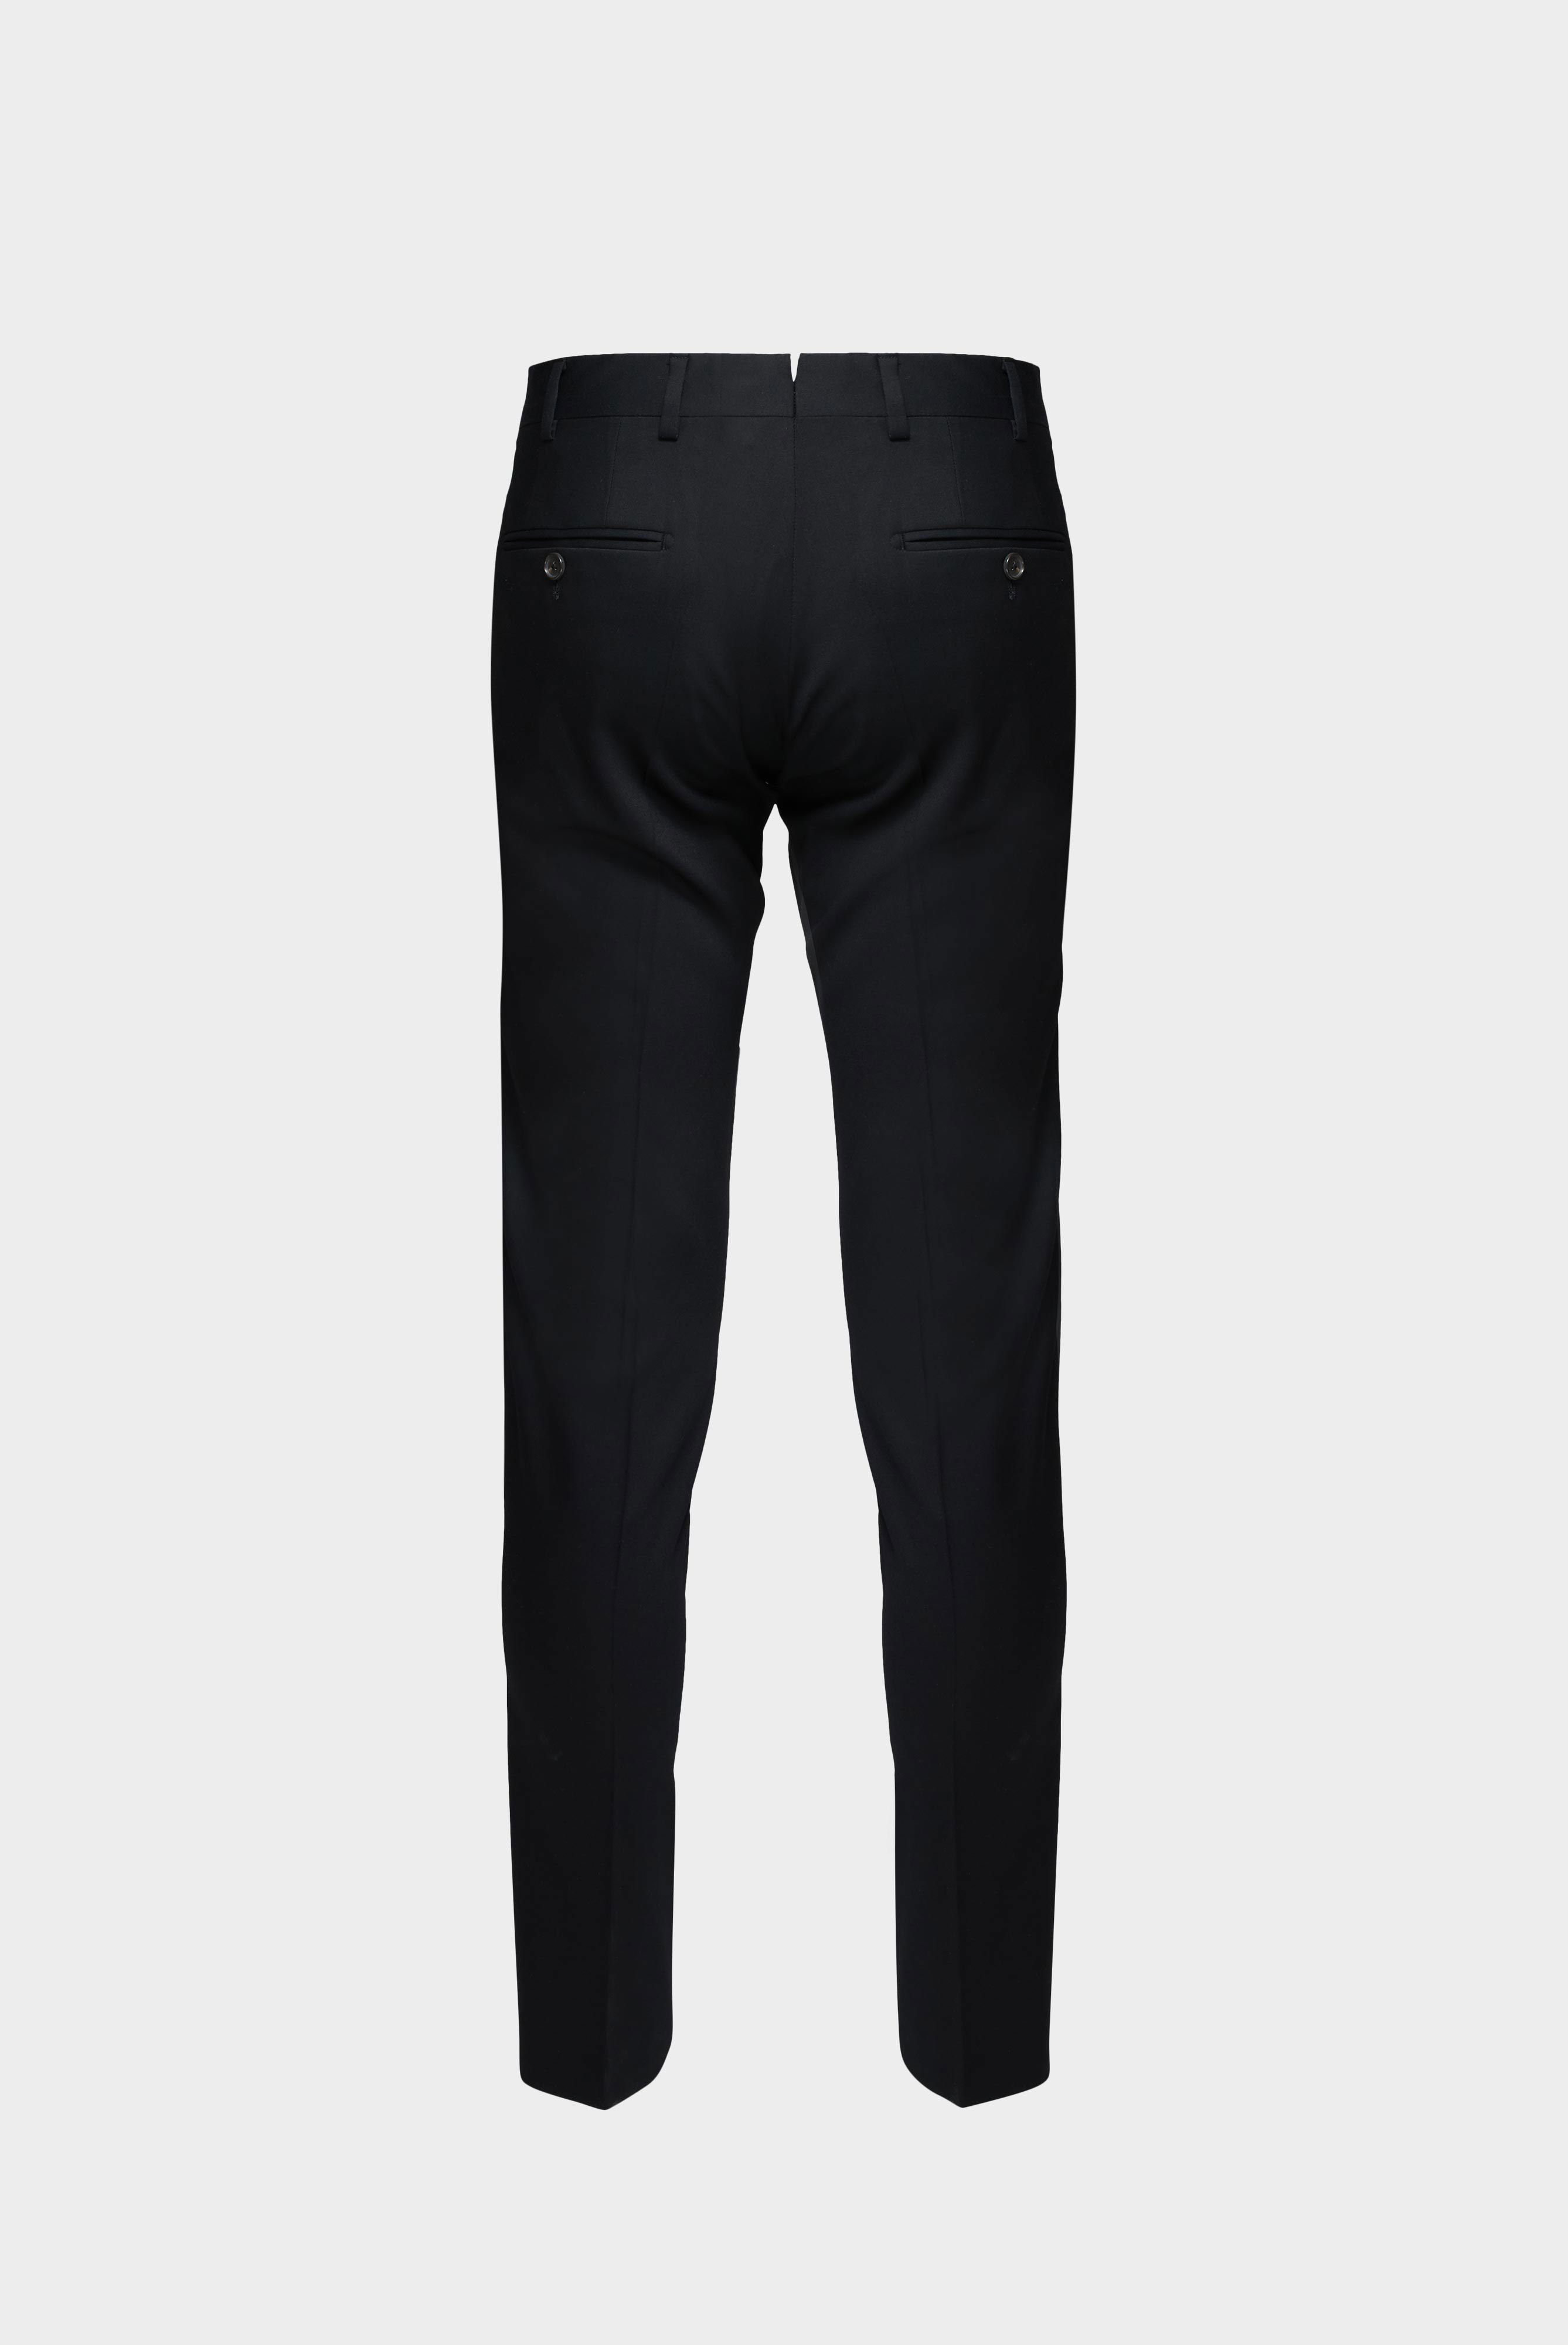 Jeans & Hosen+Hose aus Wolle Slim Fit+20.7880.16.H01010.099.28